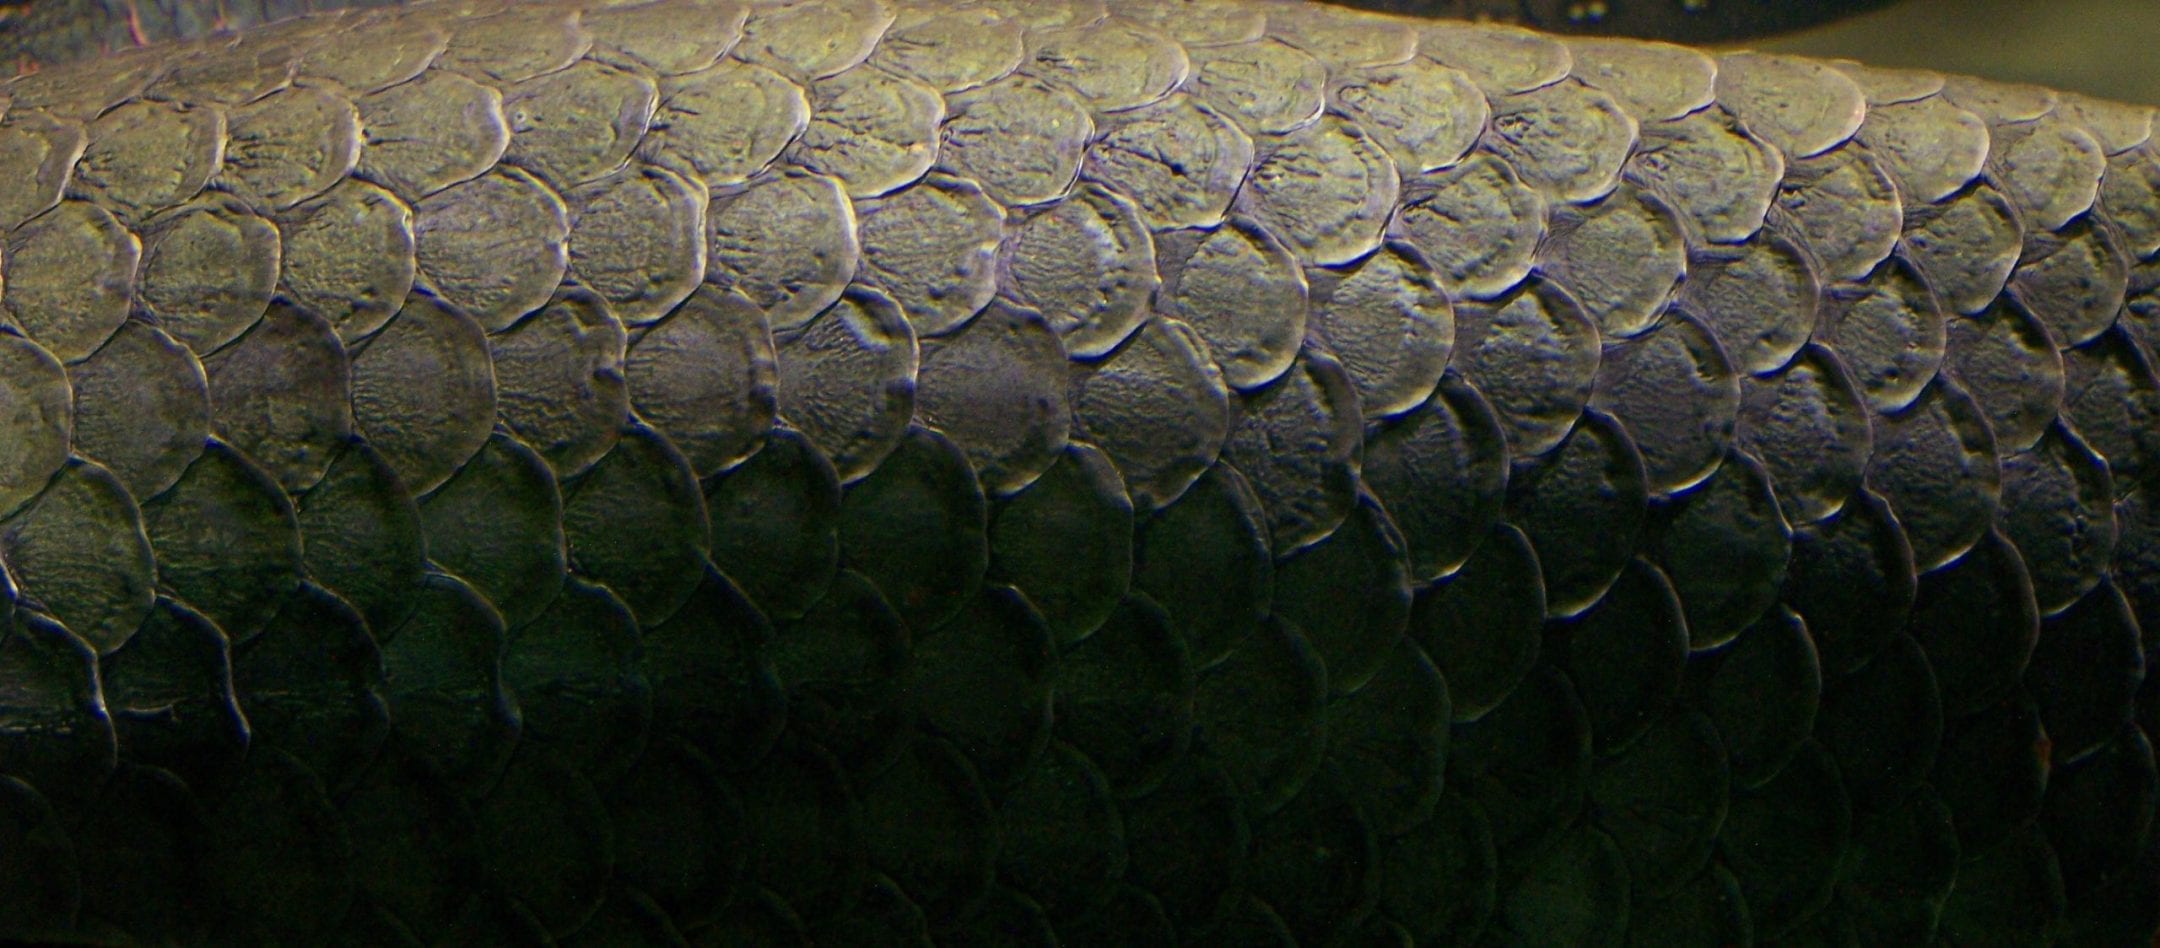 Arapaima fish scales — AskNature